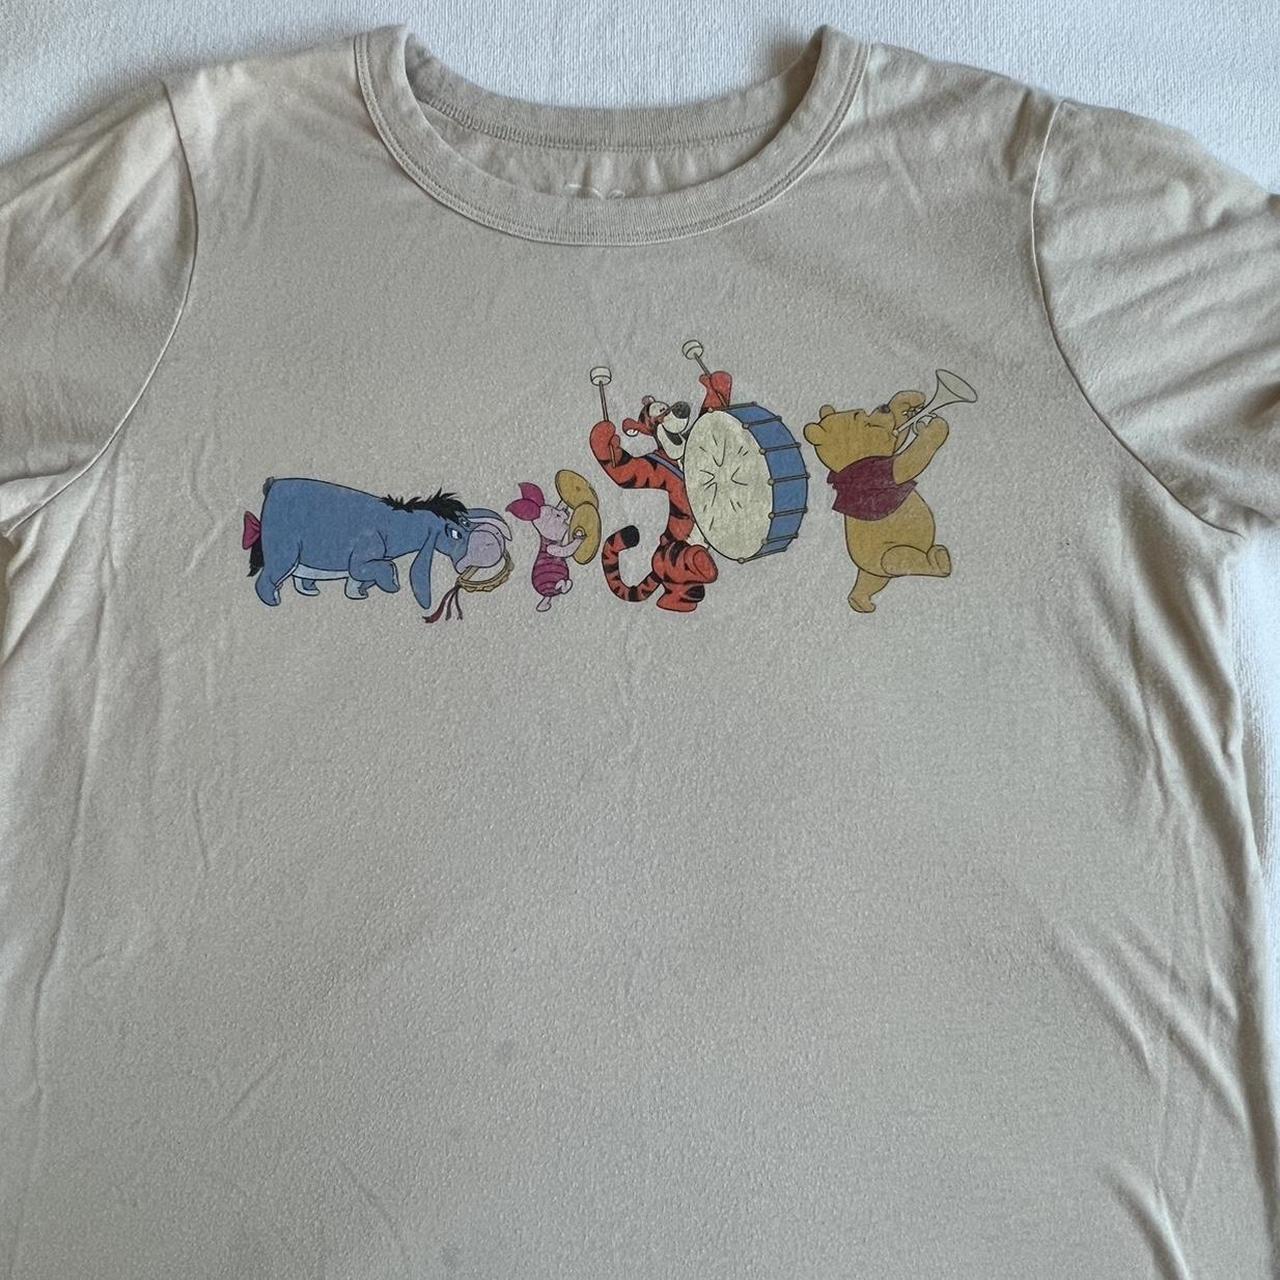 Vintage Winnie the Pooh ribbon shirt dress Flat - Depop